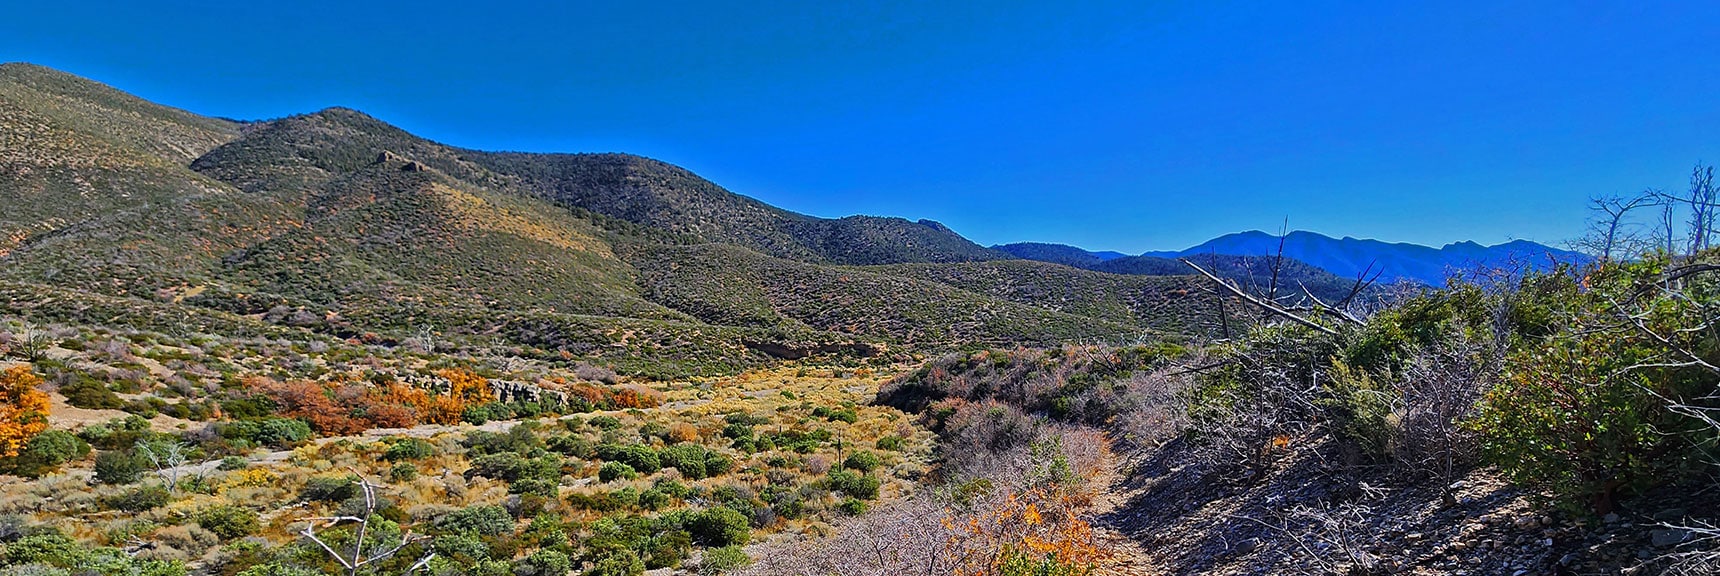 Descending Toward Lovell Main Wash. Low Ledge Target Across Canyon. | Schaefer Springs Loop Trail | Lovell Canyon, Nevada